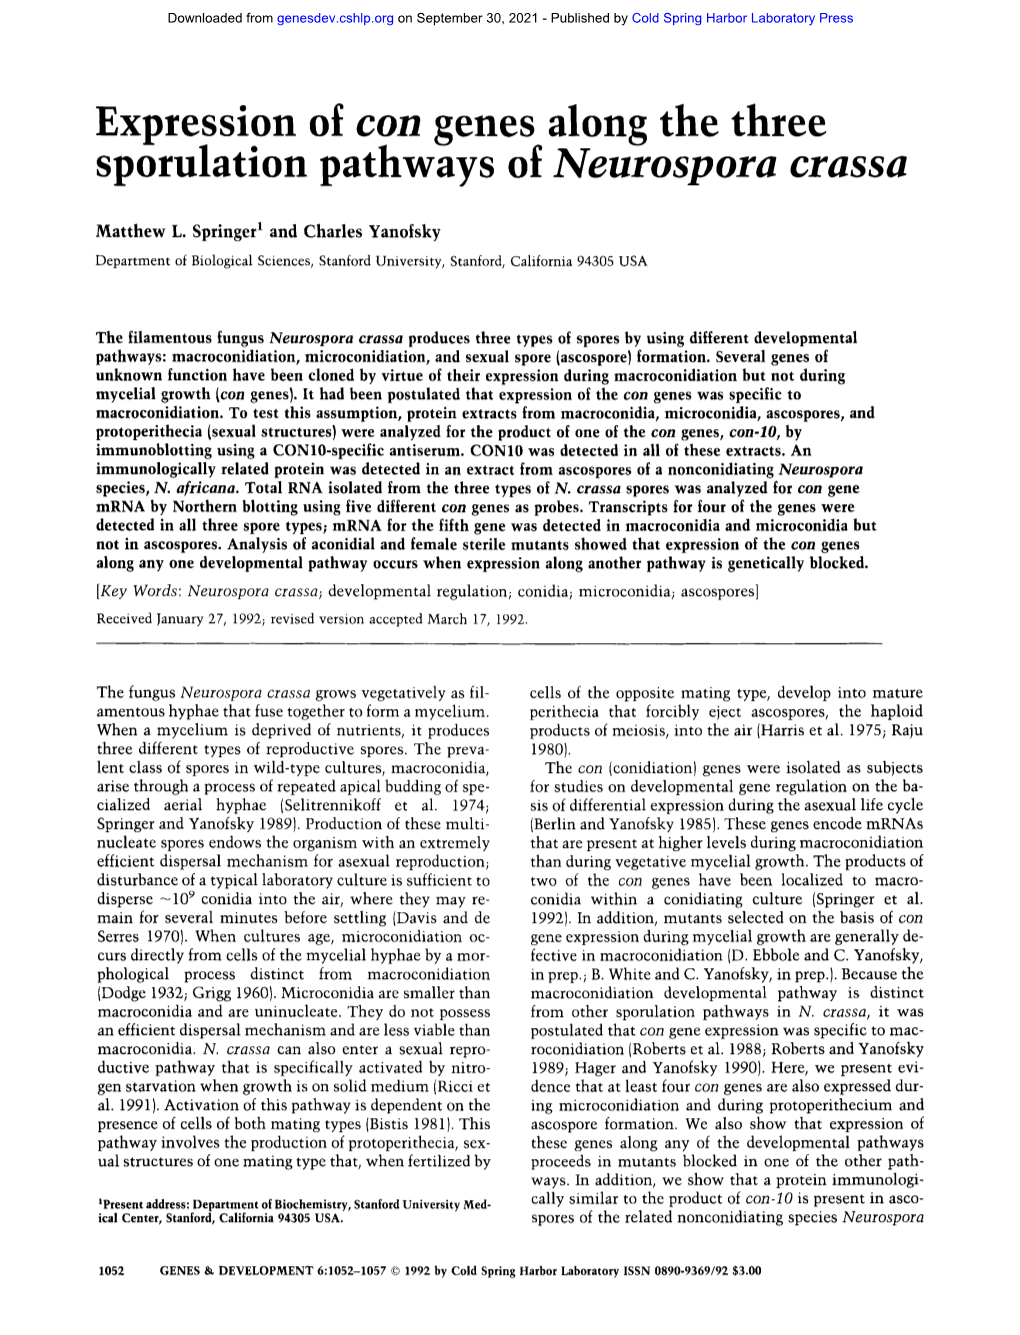 Expression of Con Genes Along the Three Sporulation Pathways of Neurospora Crassa